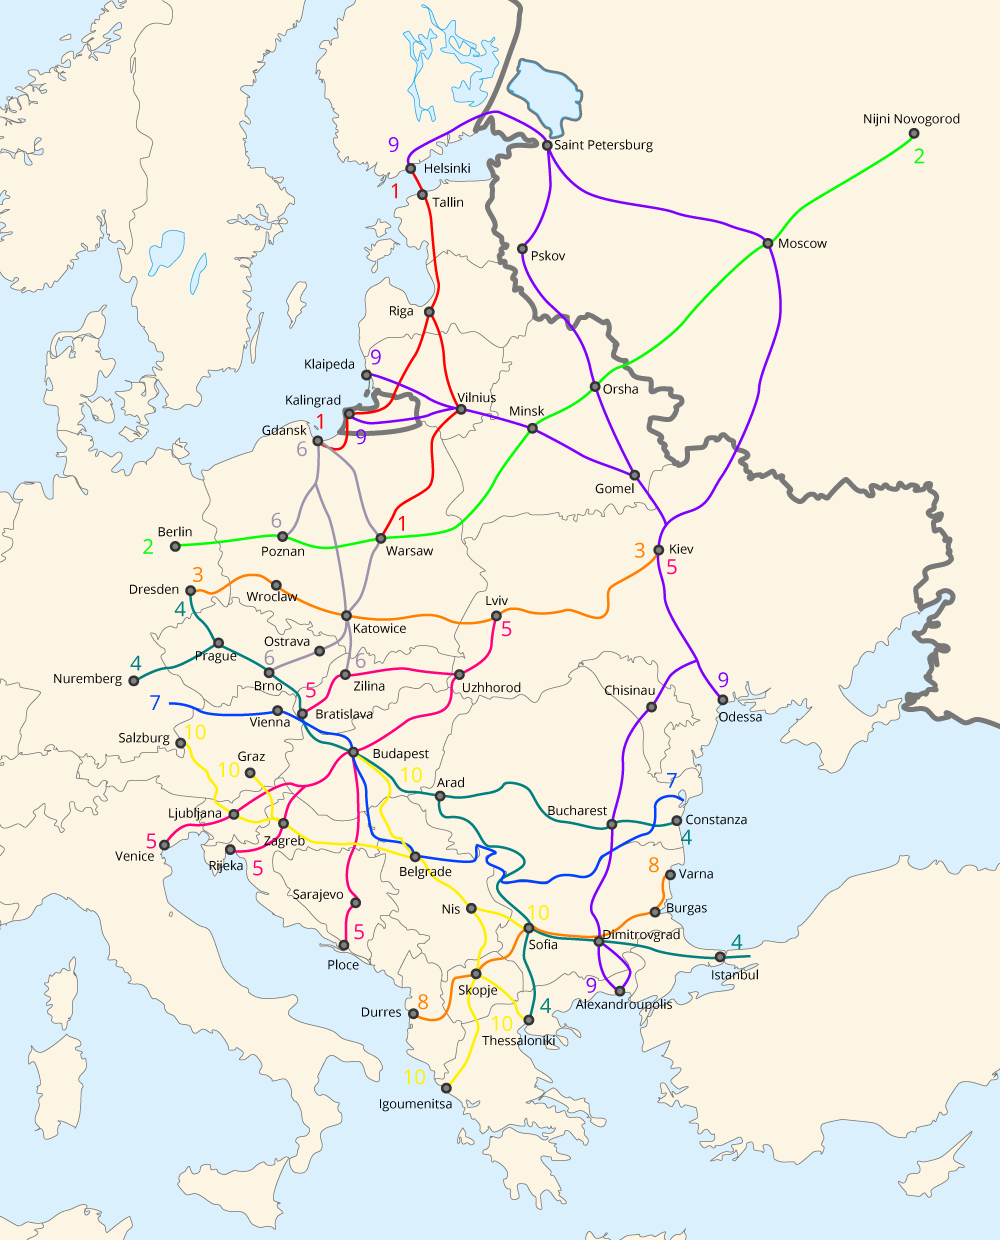 Pan-European_corridors